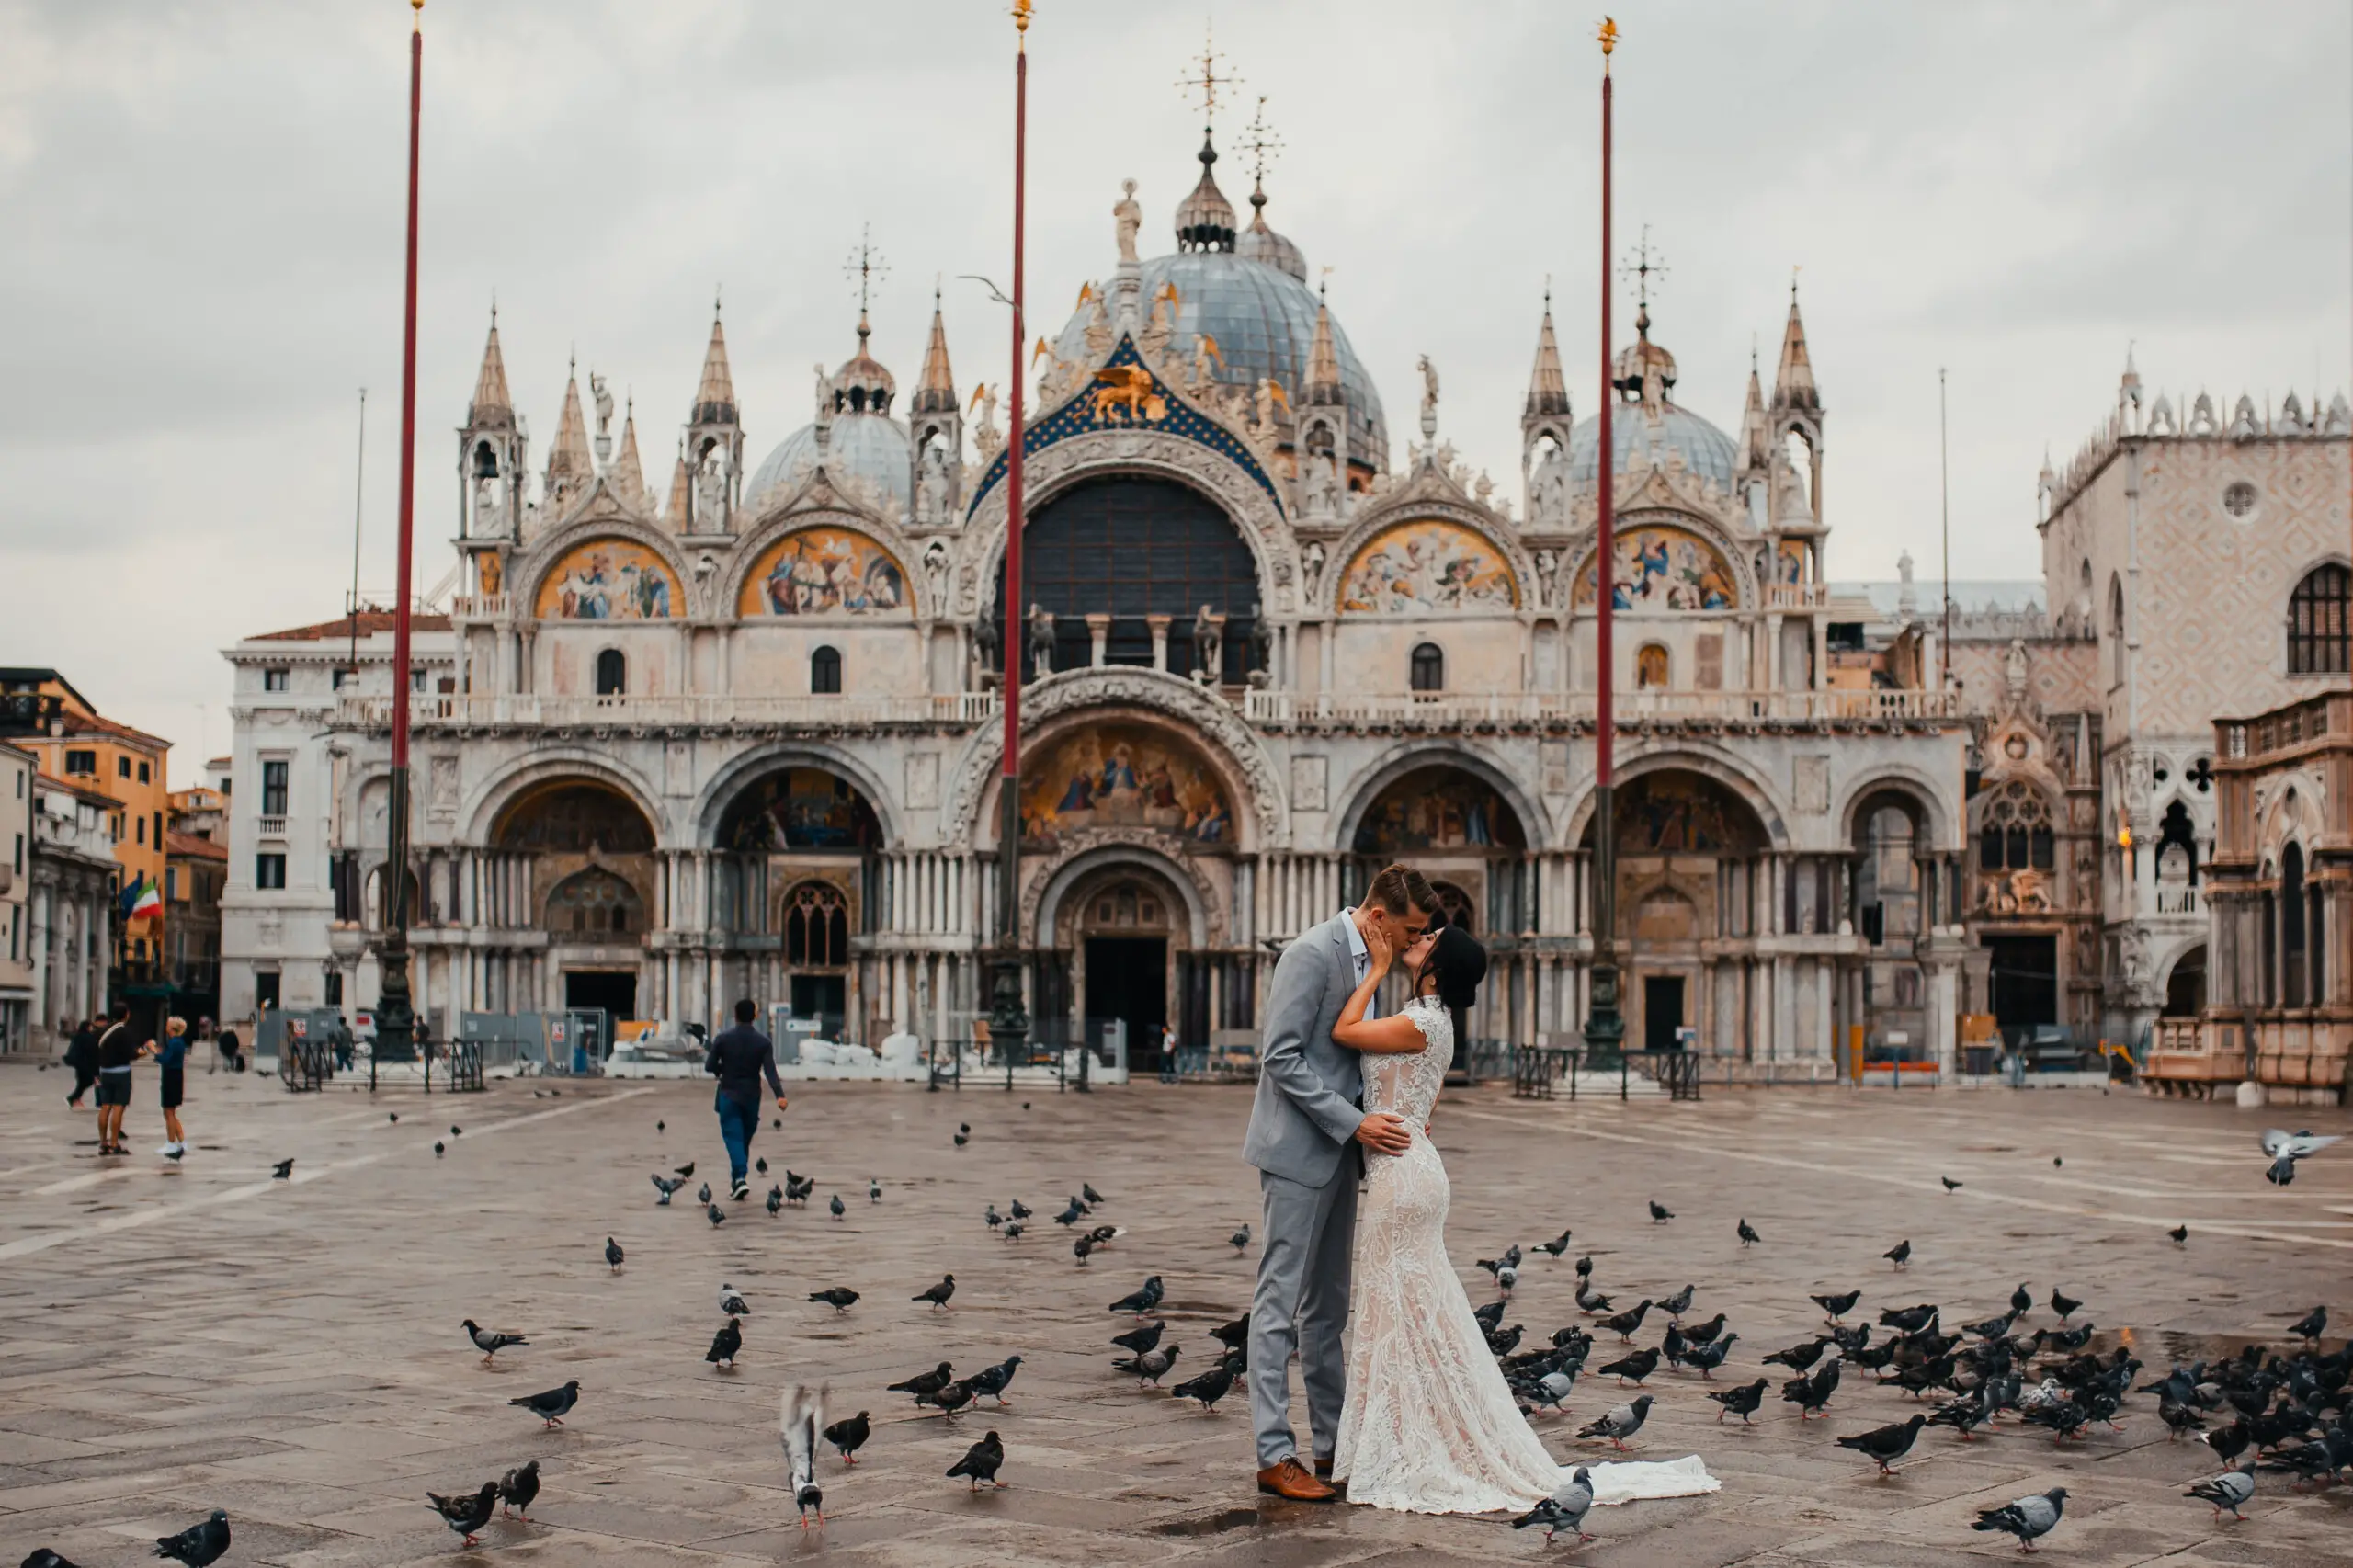 Wedding photoshoot by Bethany, Localgrapher in Venice